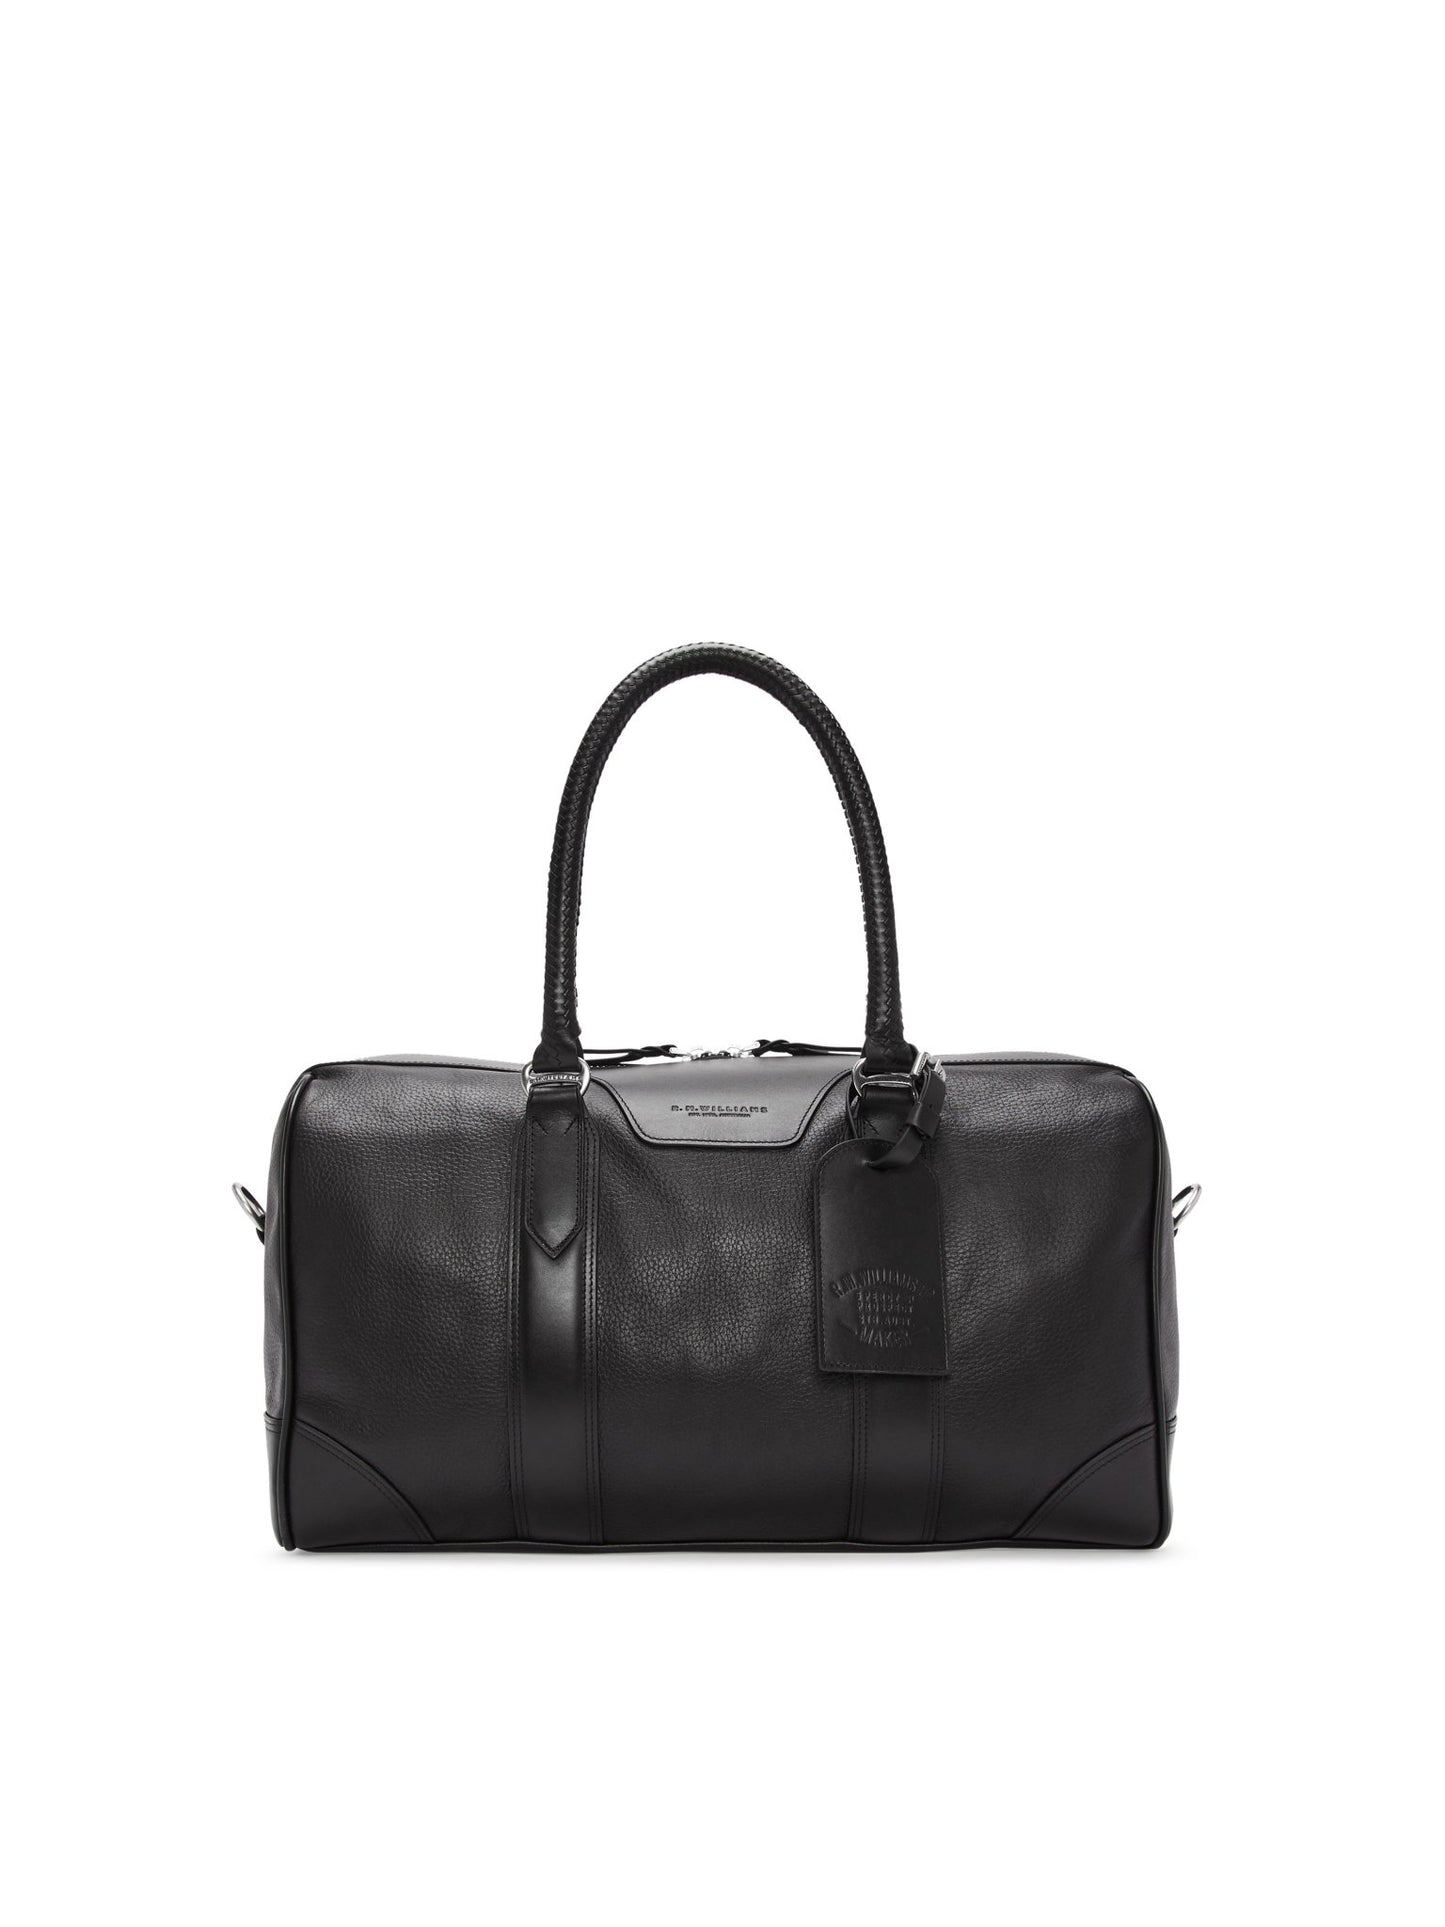 RMW Overnight Bag - Thomson's Suits Ltd - Black - - 53607